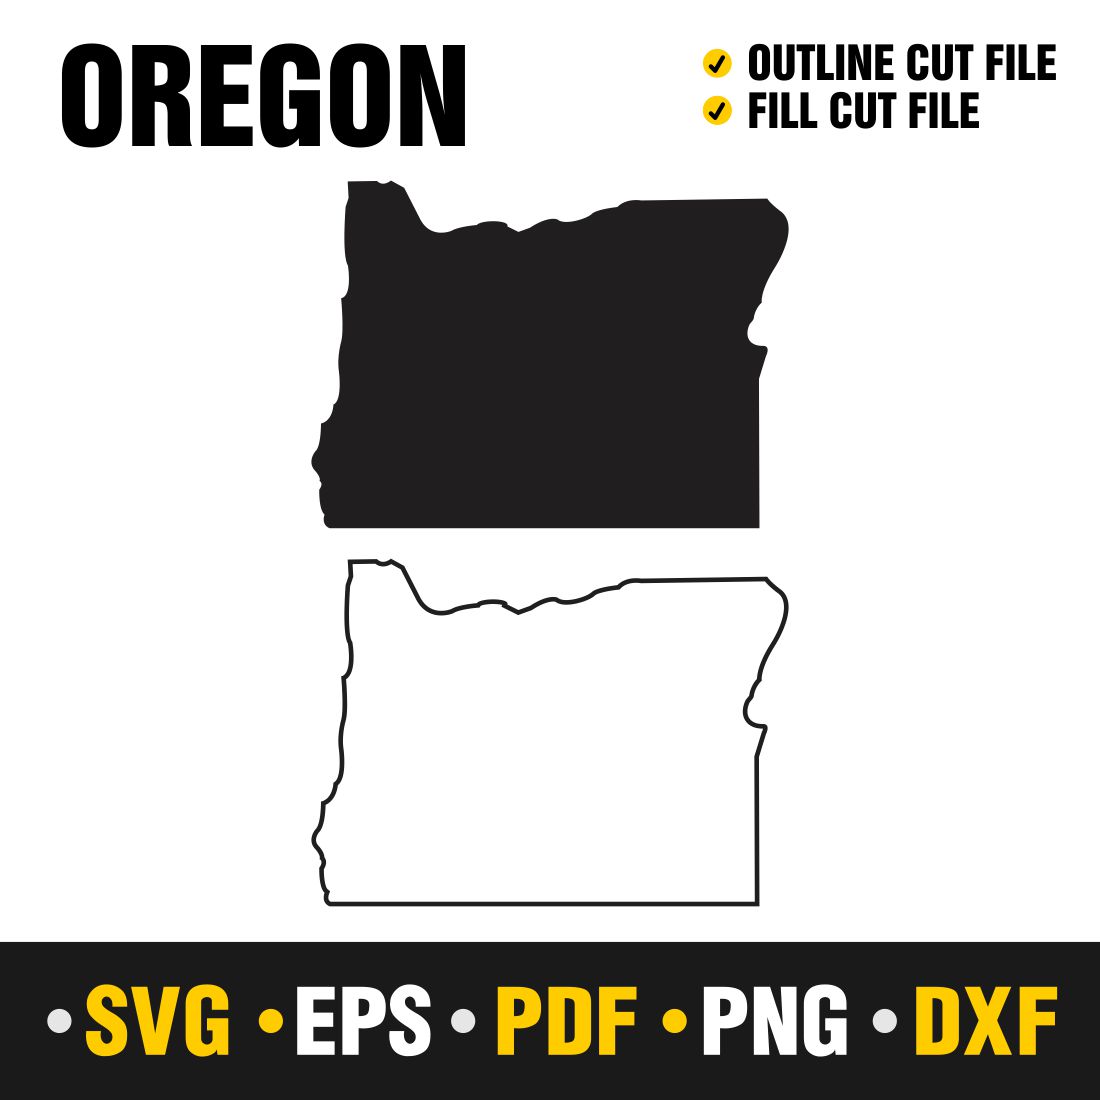 Oregon cover image.